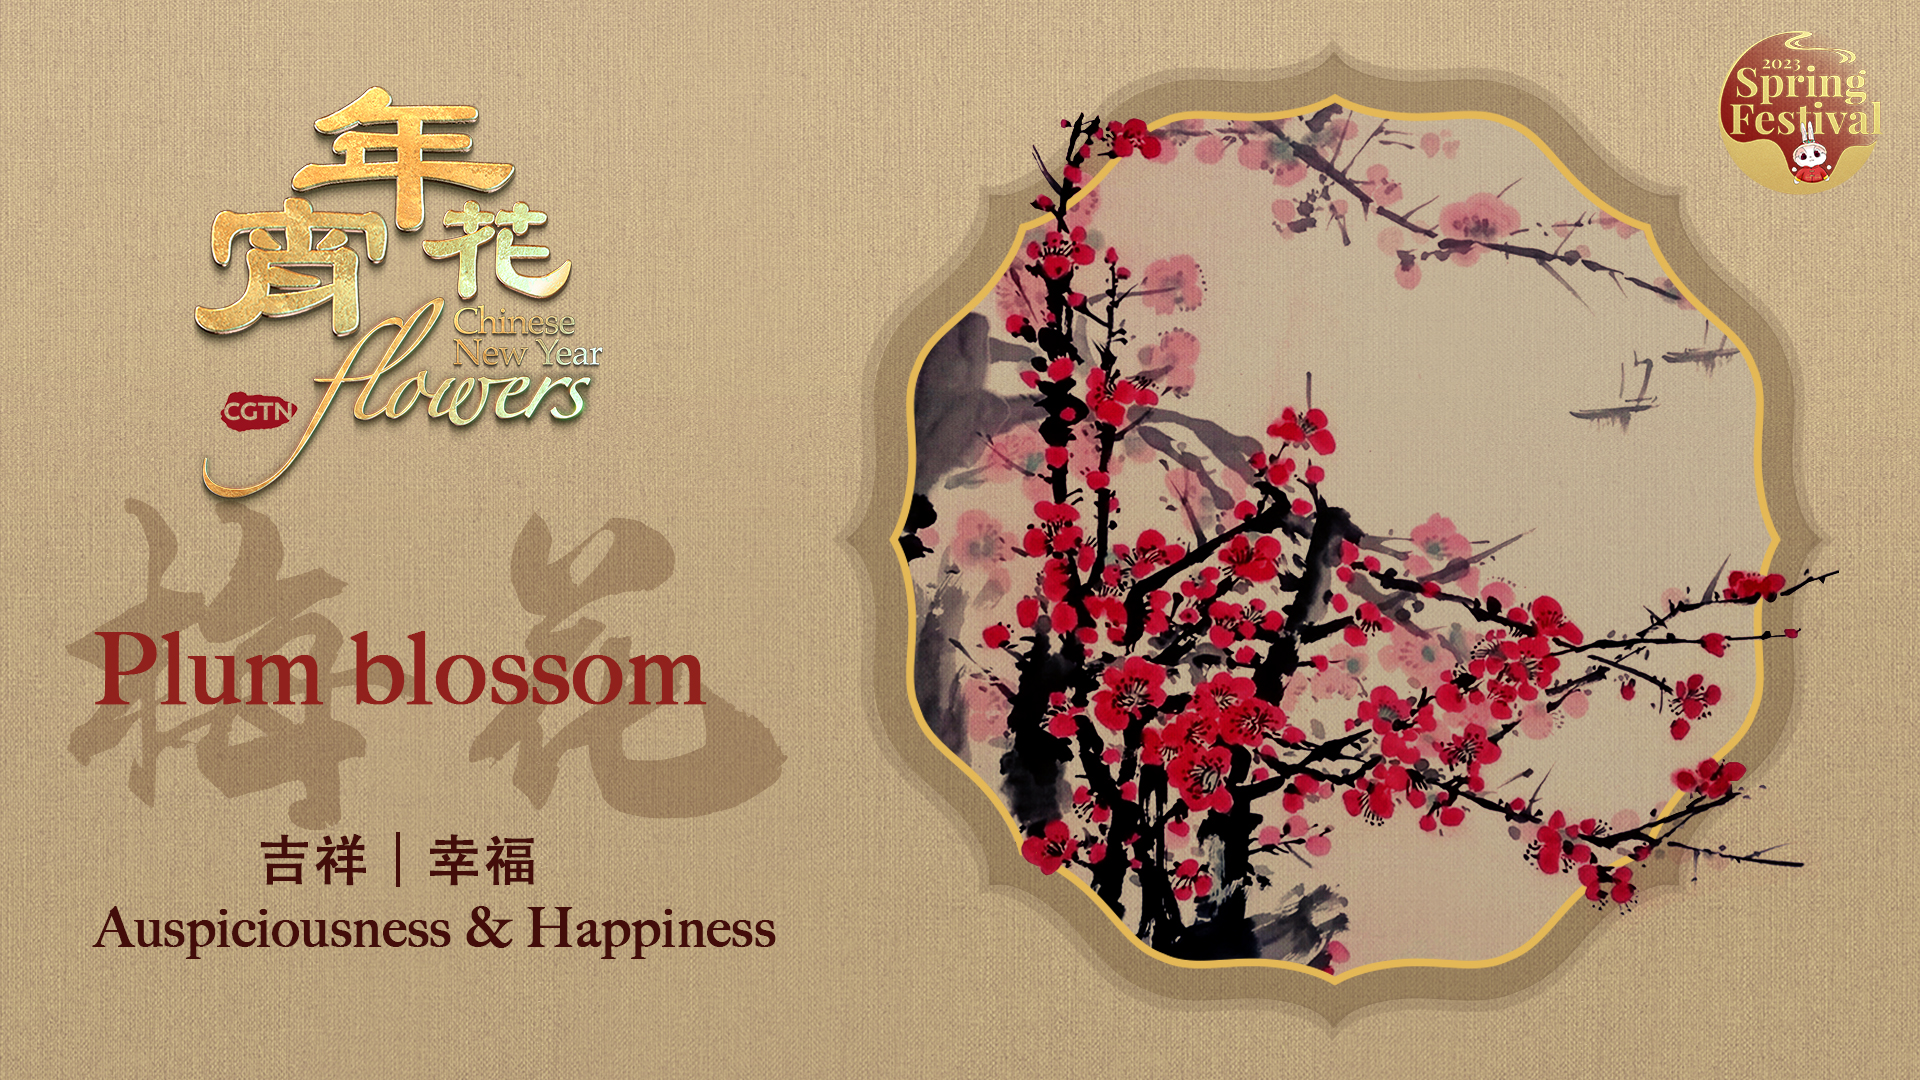 Chinese New Year Flowers: Plum blossom